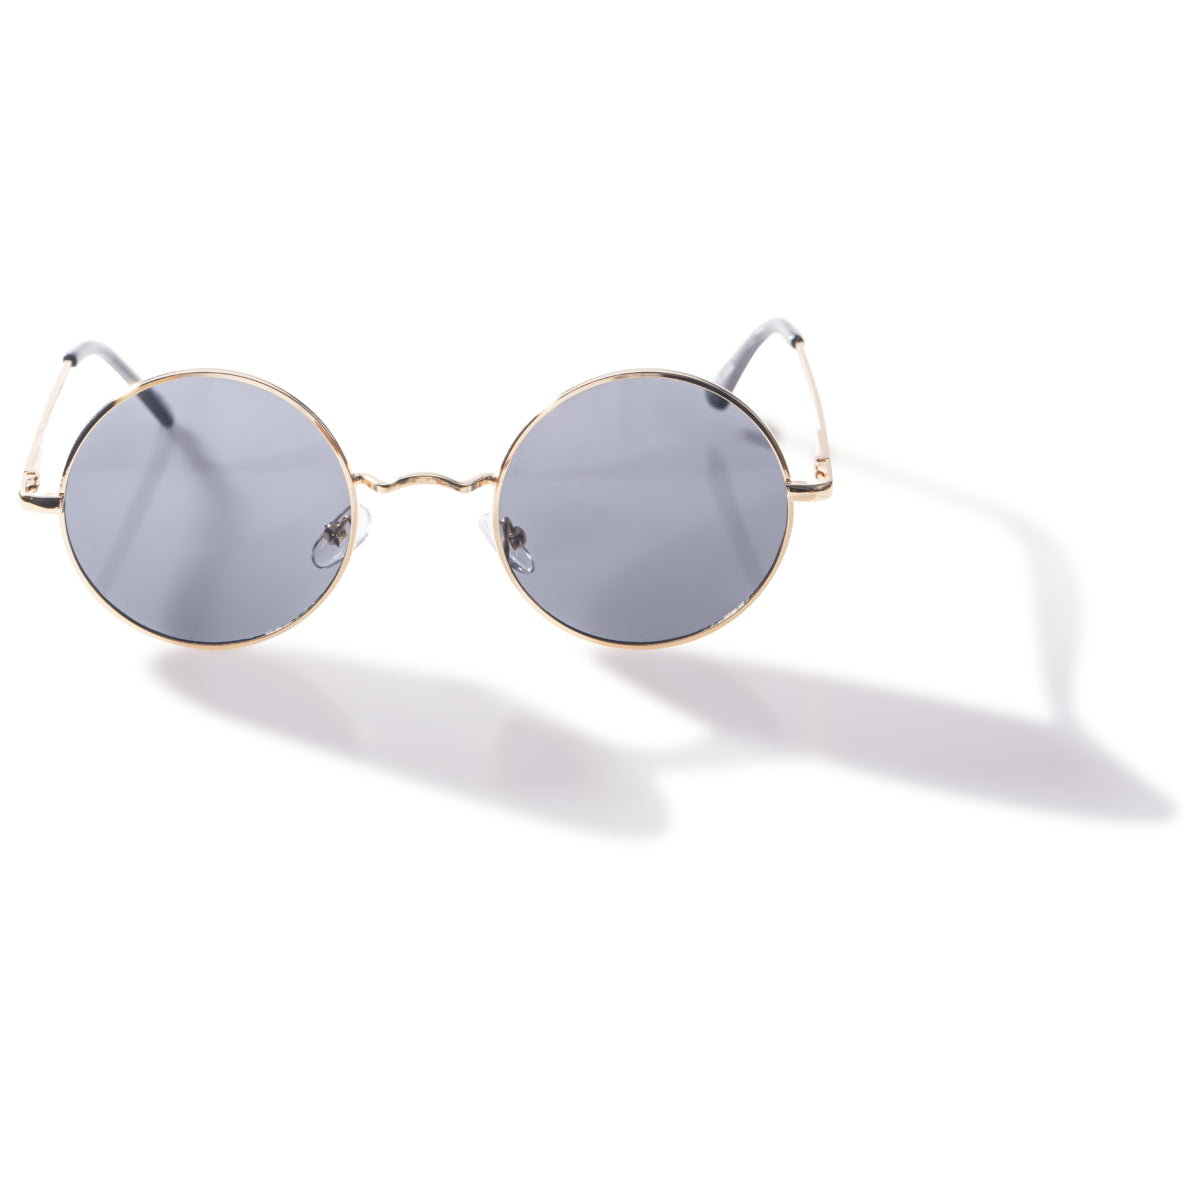 John Lennon Vintage Round Sunglasses Costume Accessory - Mirror